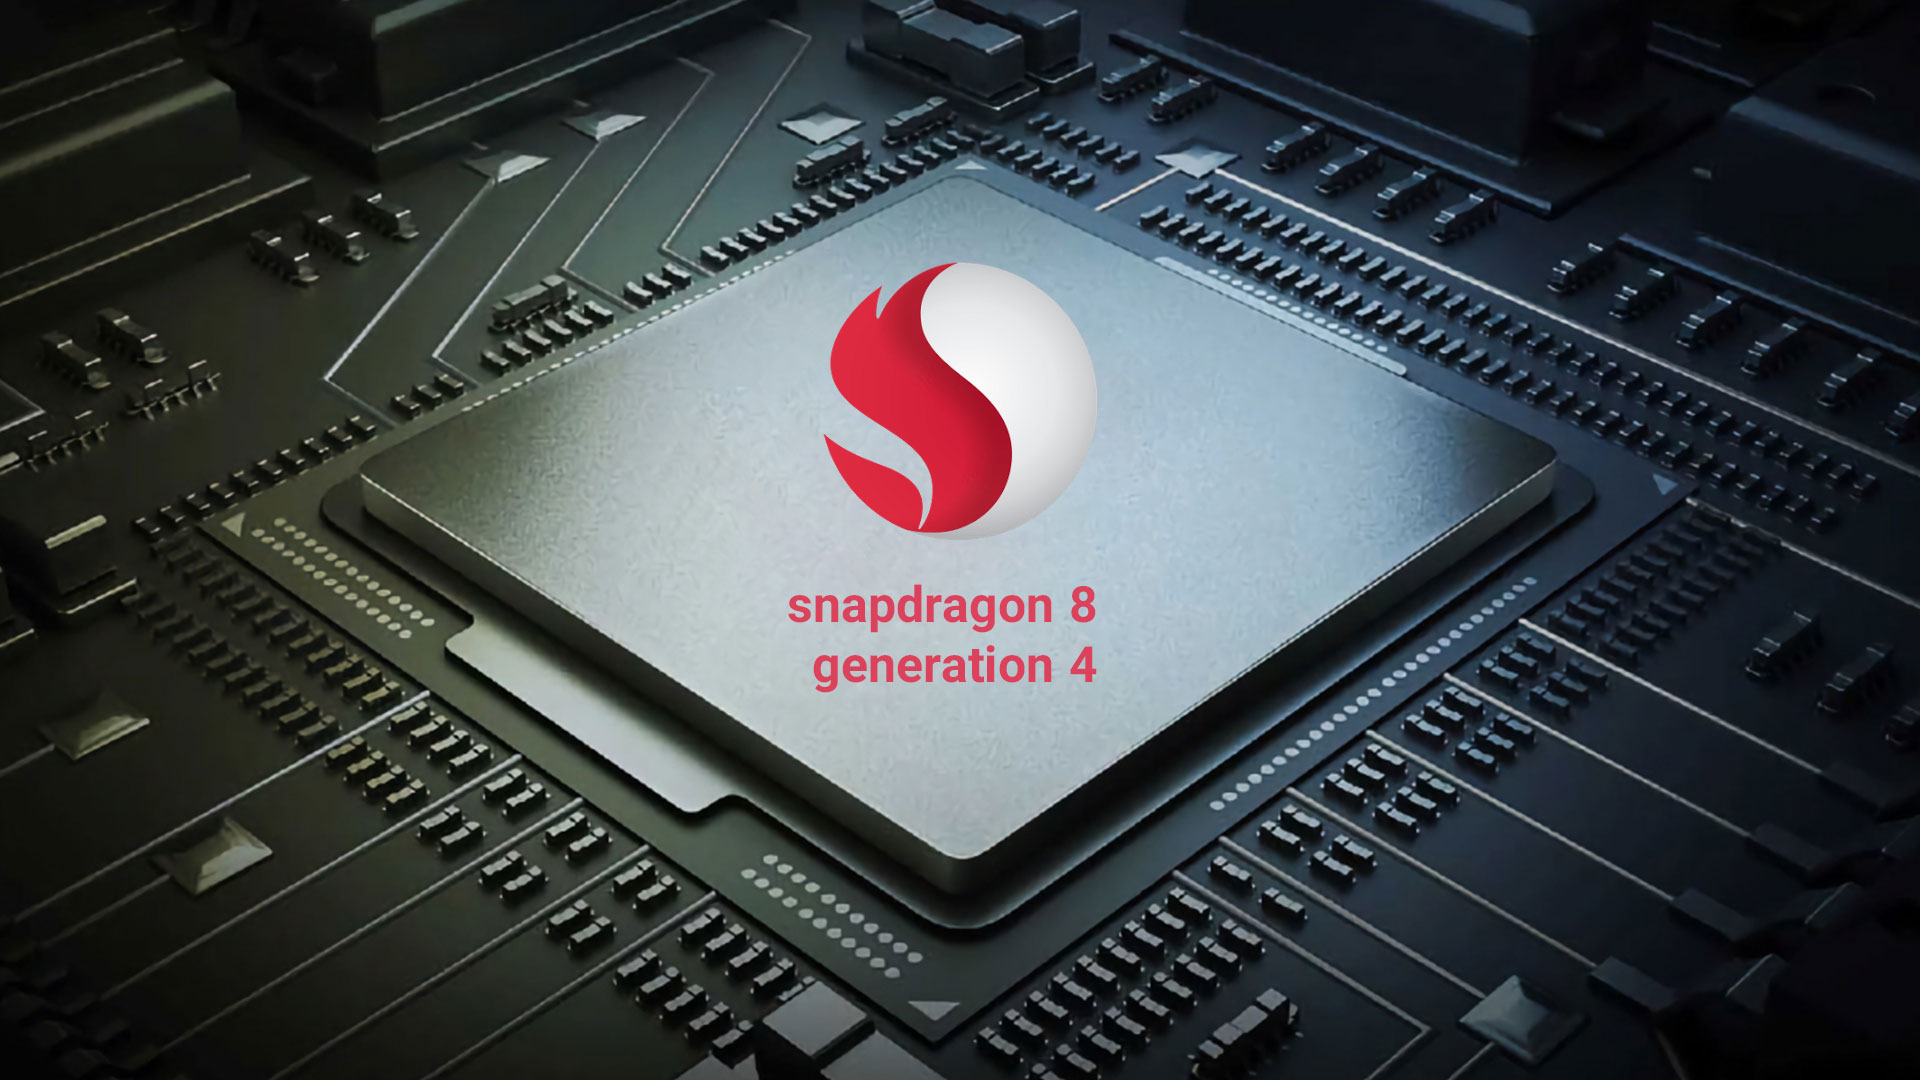 snapdragon 8 generation 4